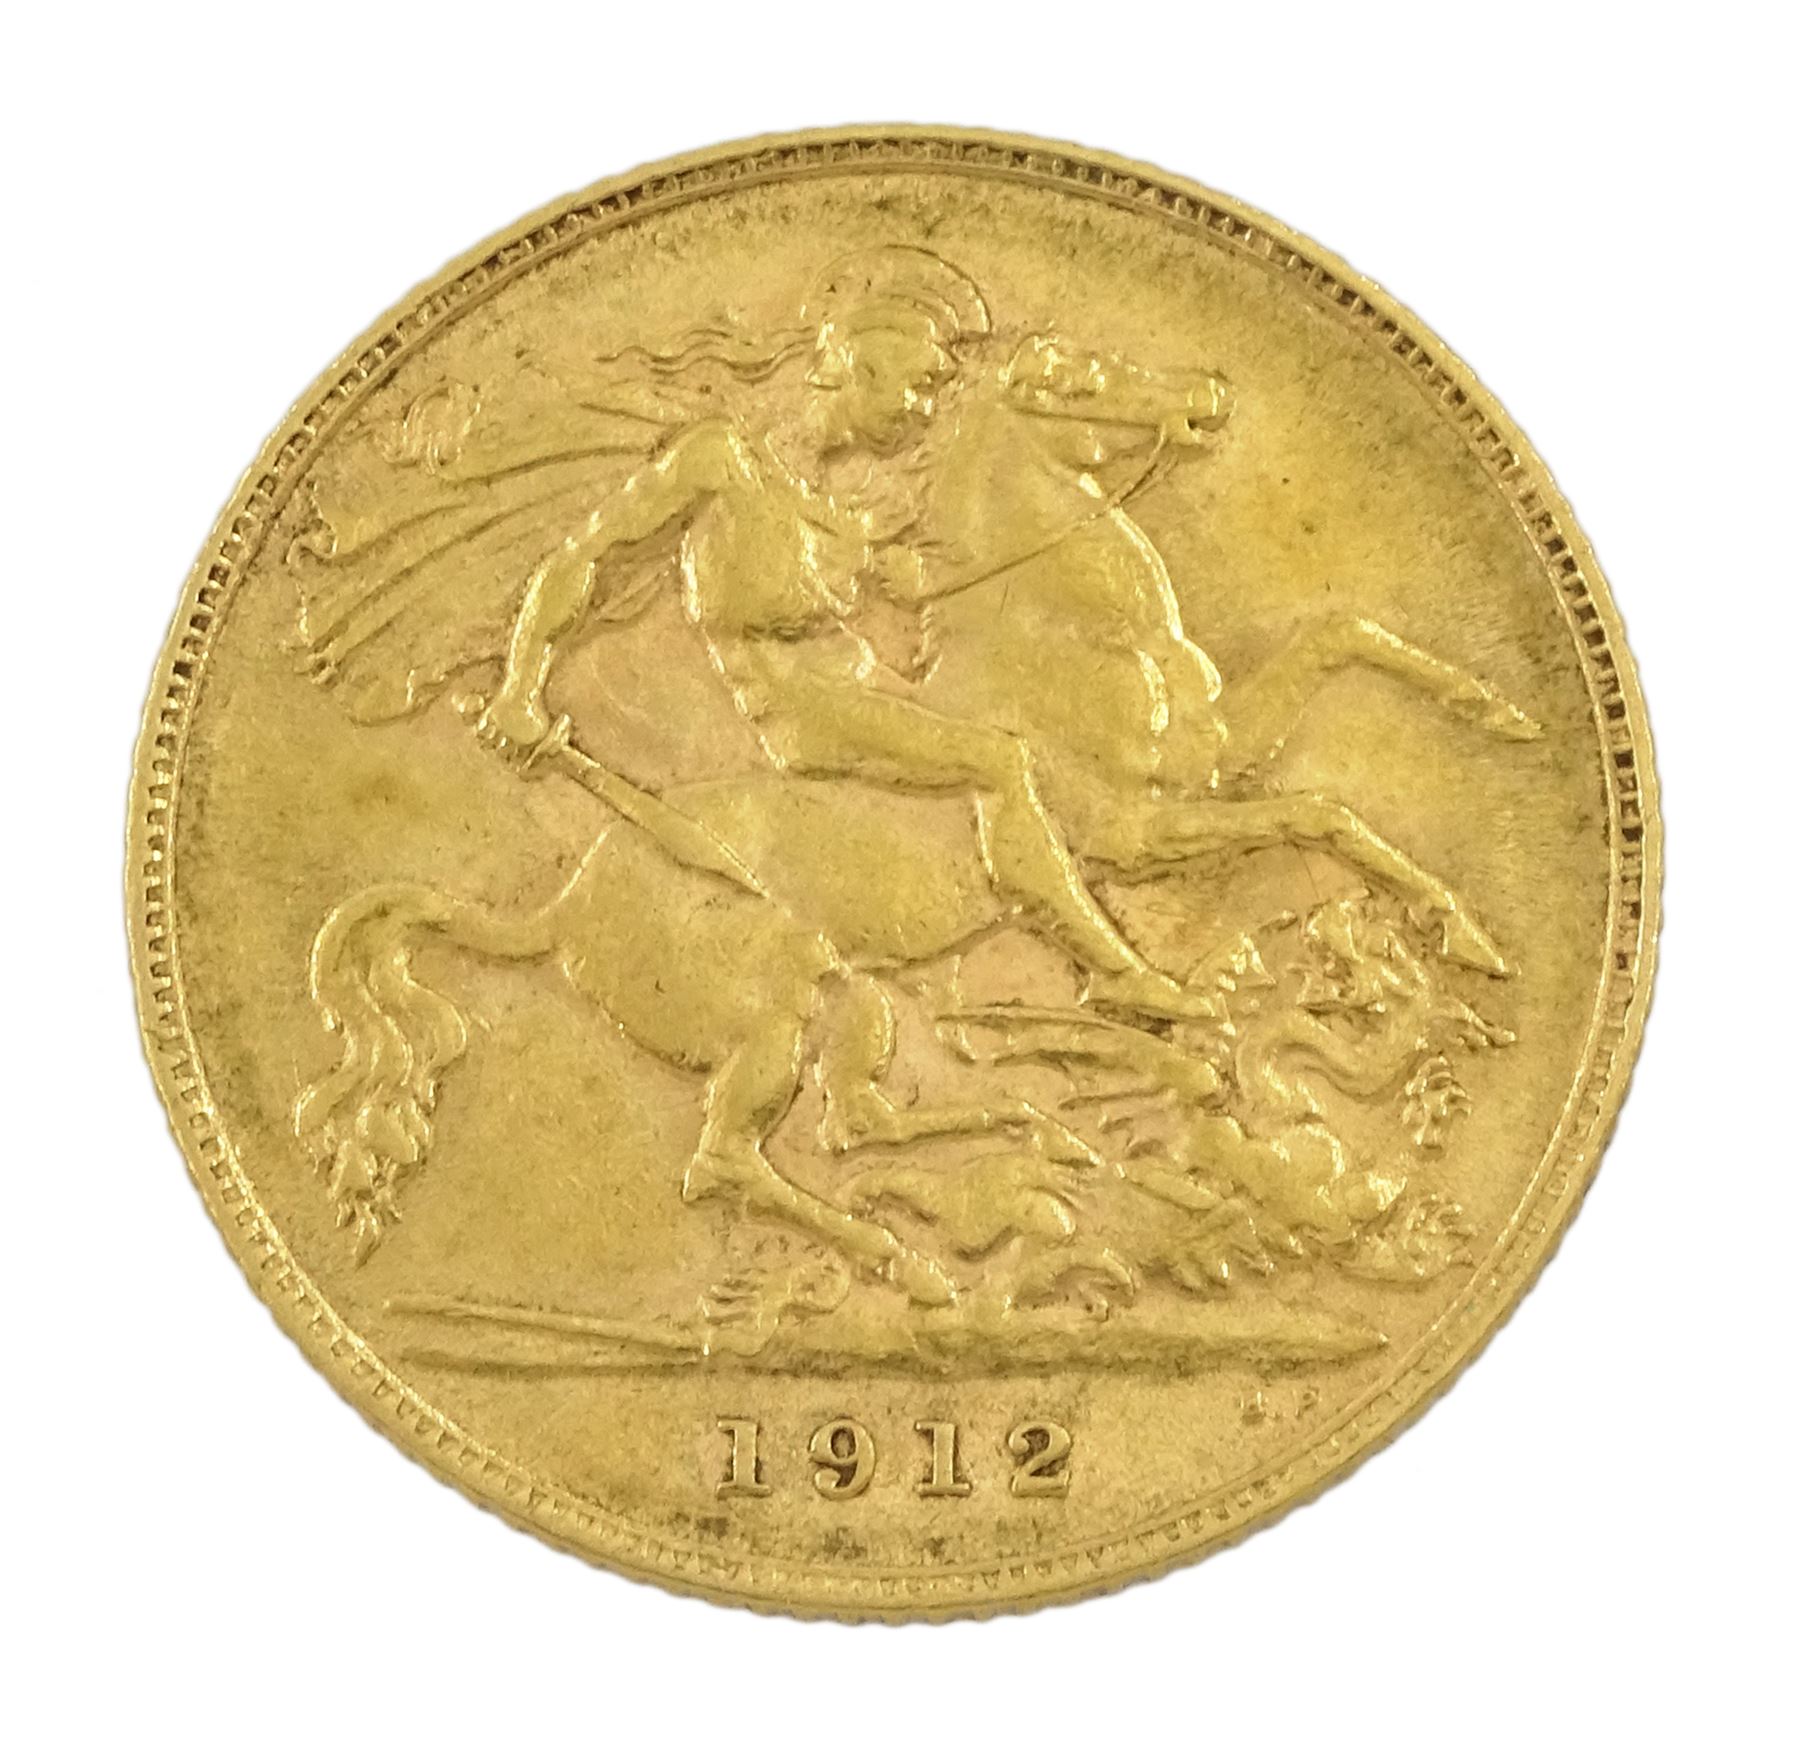 King George V 1912 gold half sovereign coin - Image 2 of 2